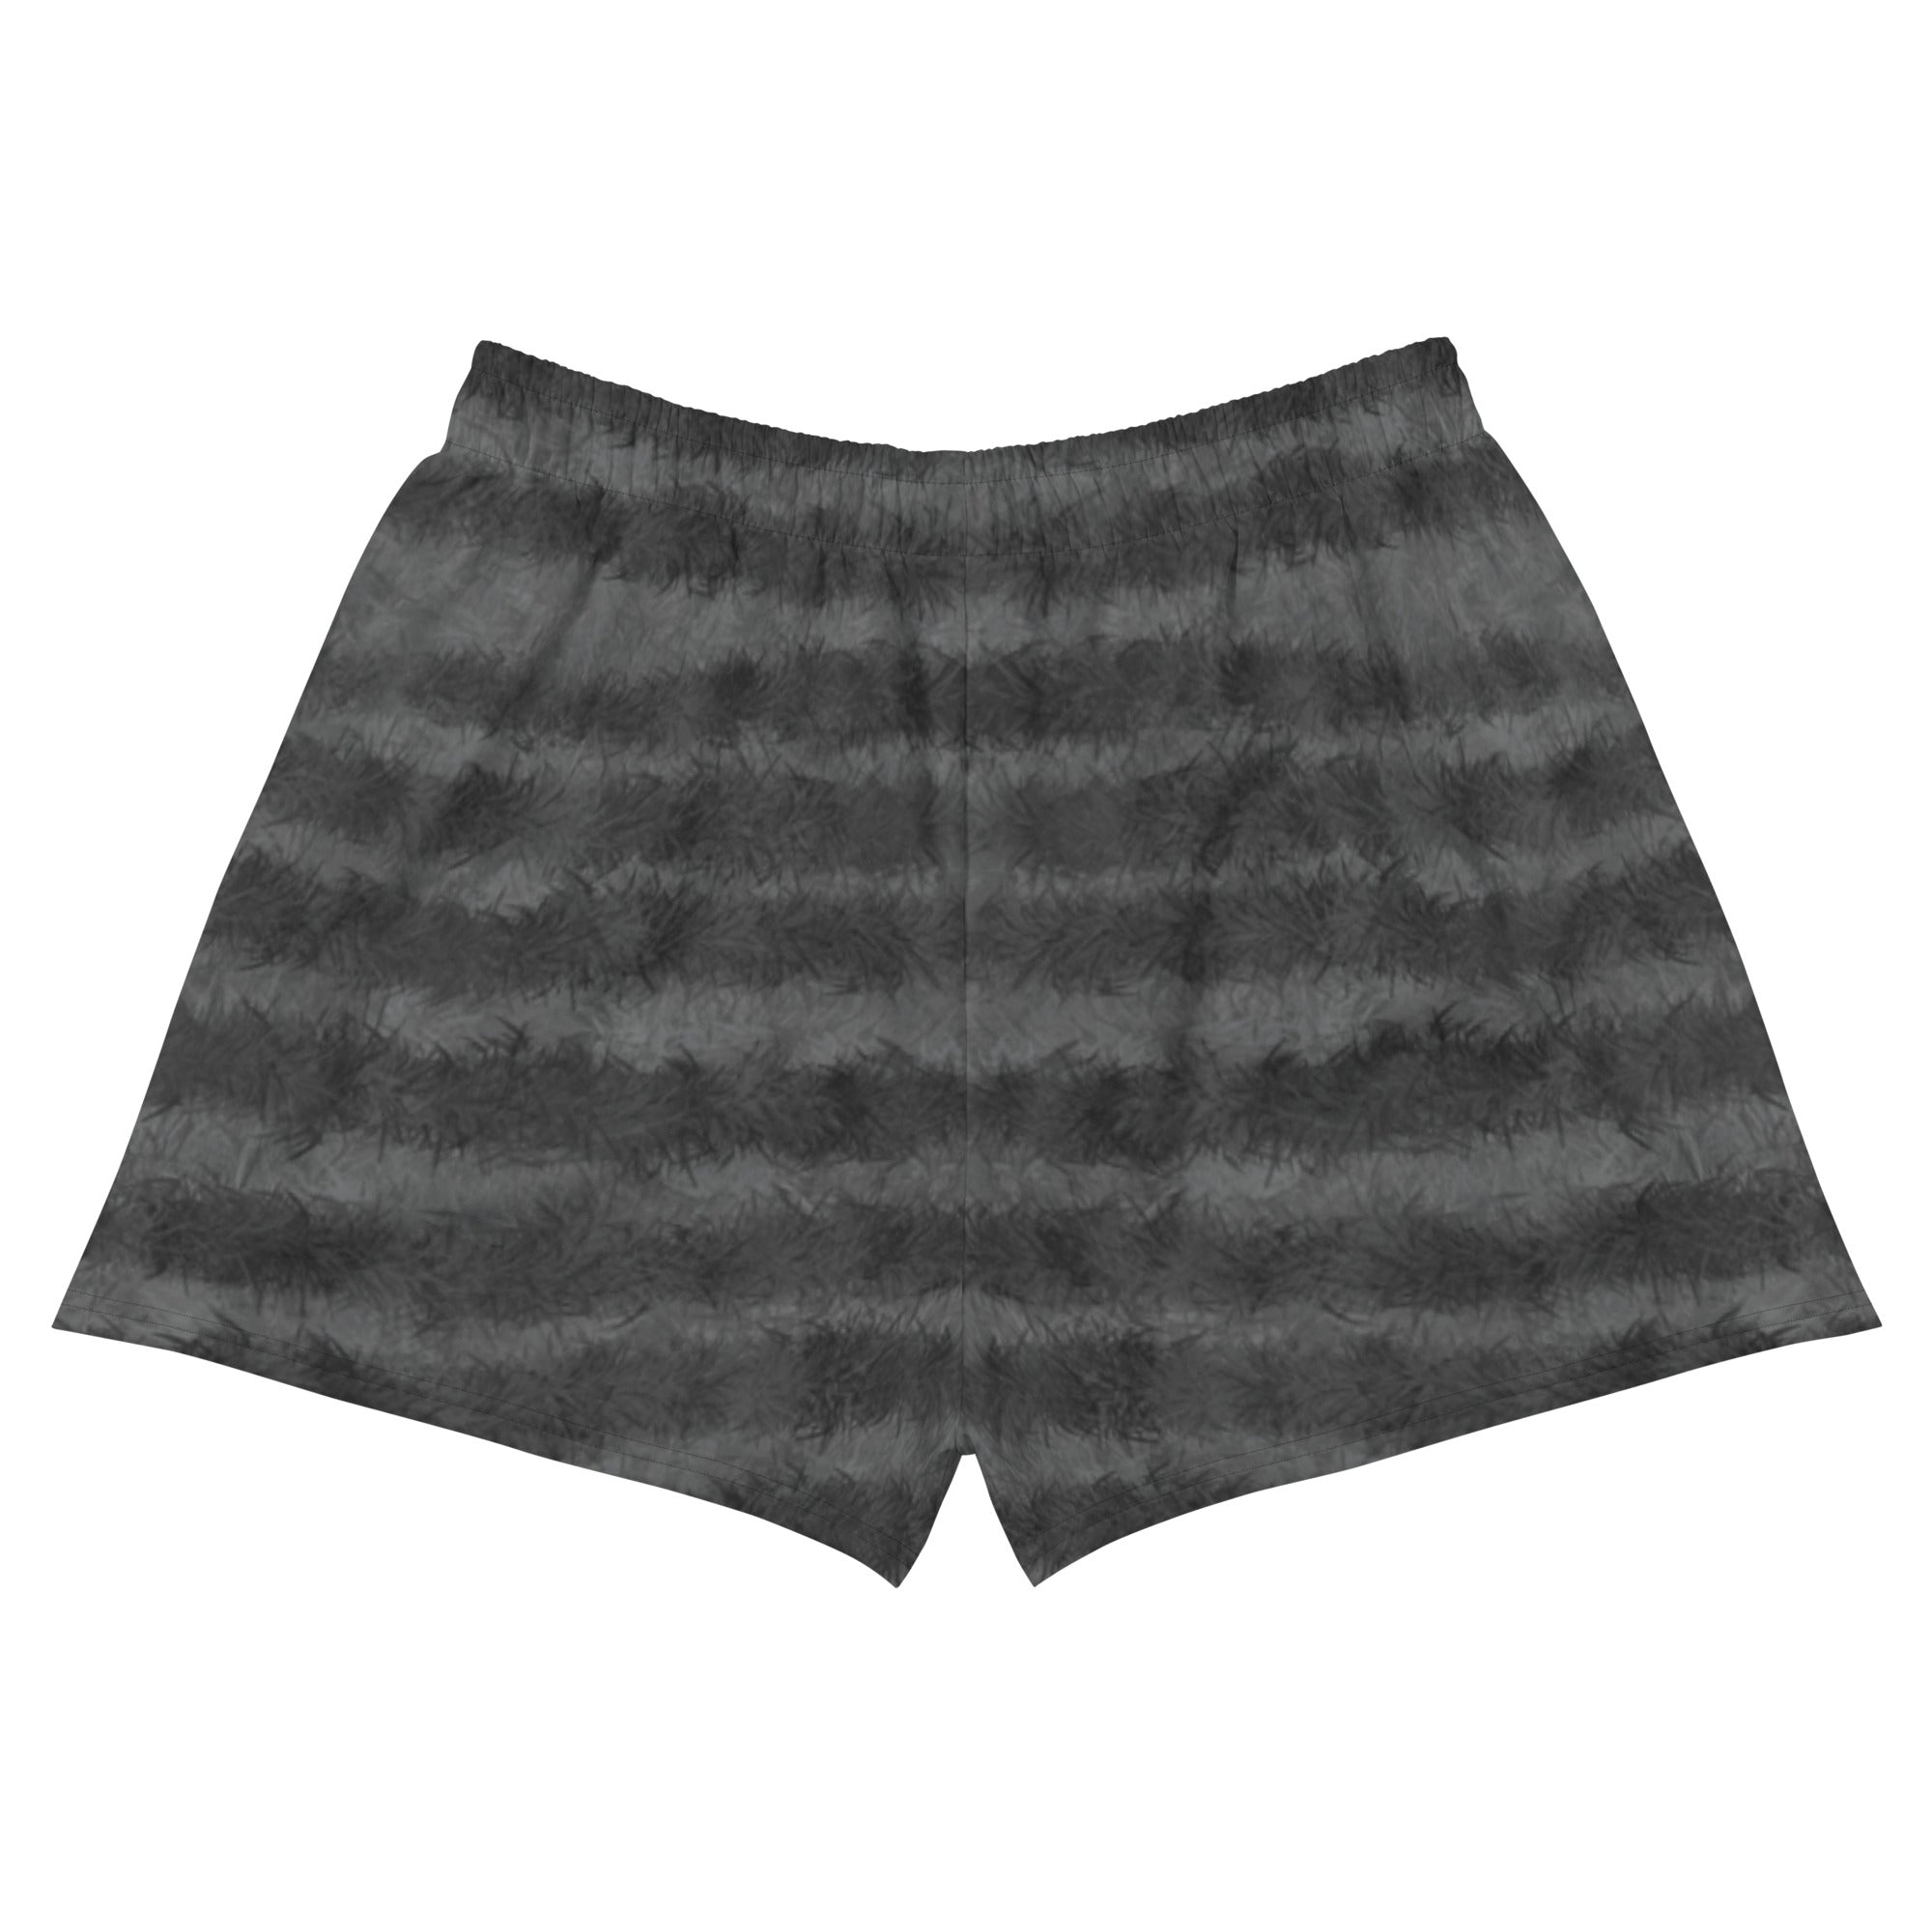 Grey Tabby Cat Fur Print Women's Athletic Short Shorts